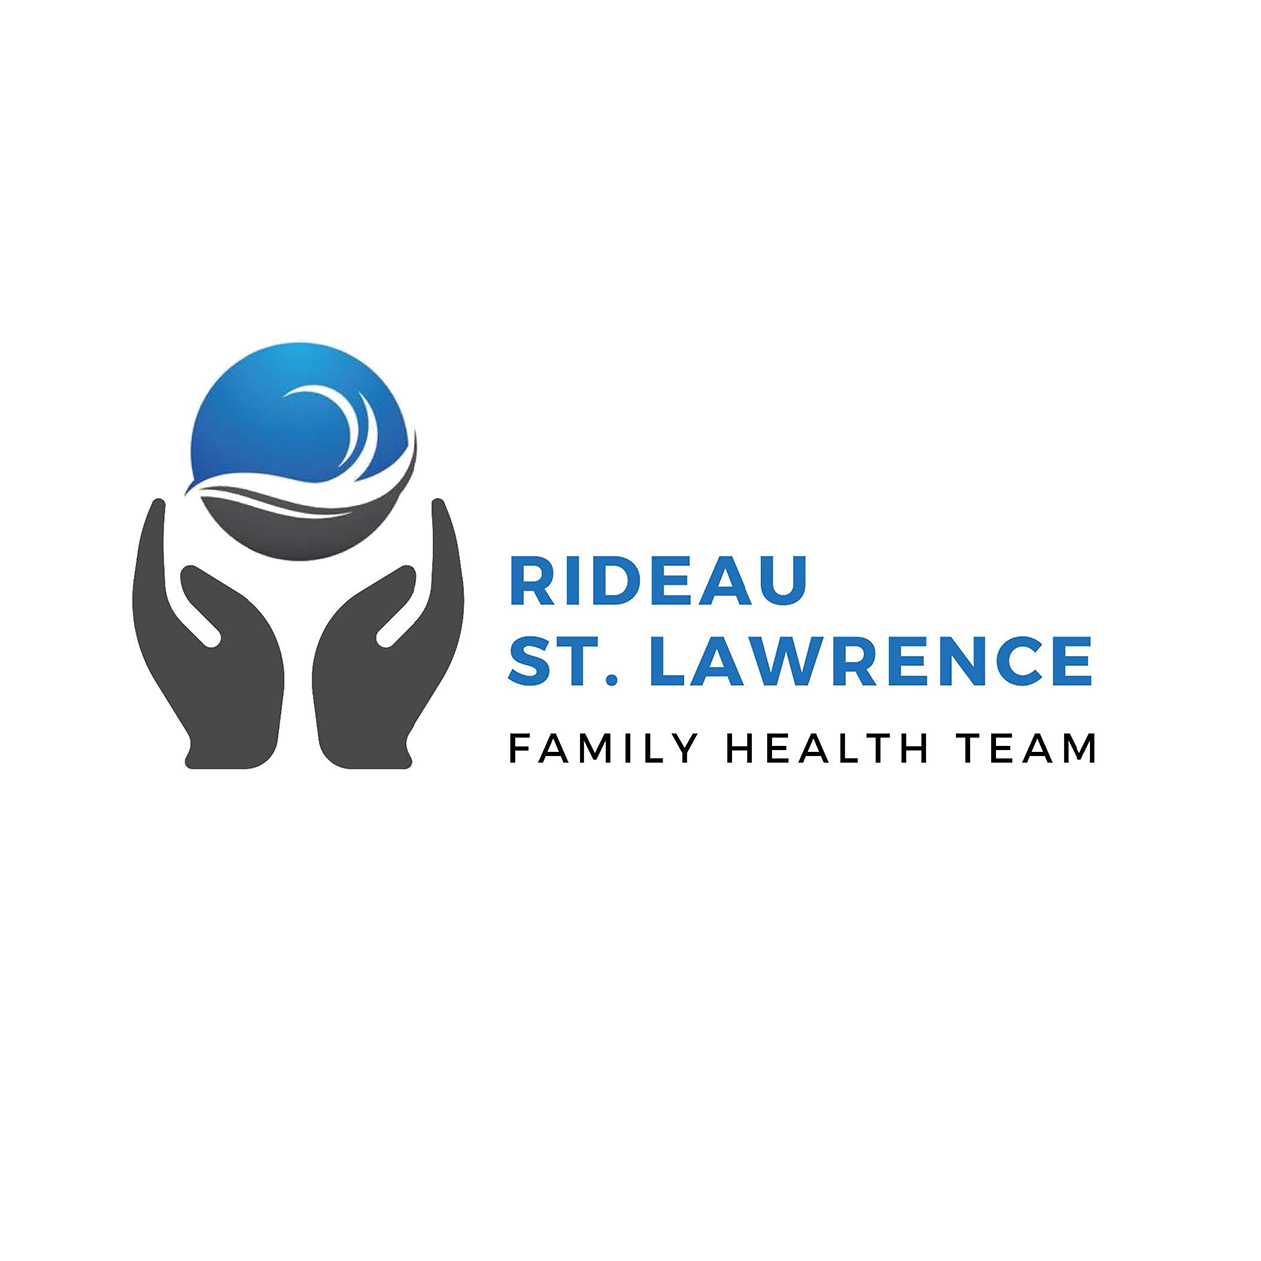 Rideau St. Lawrence Family Health Team